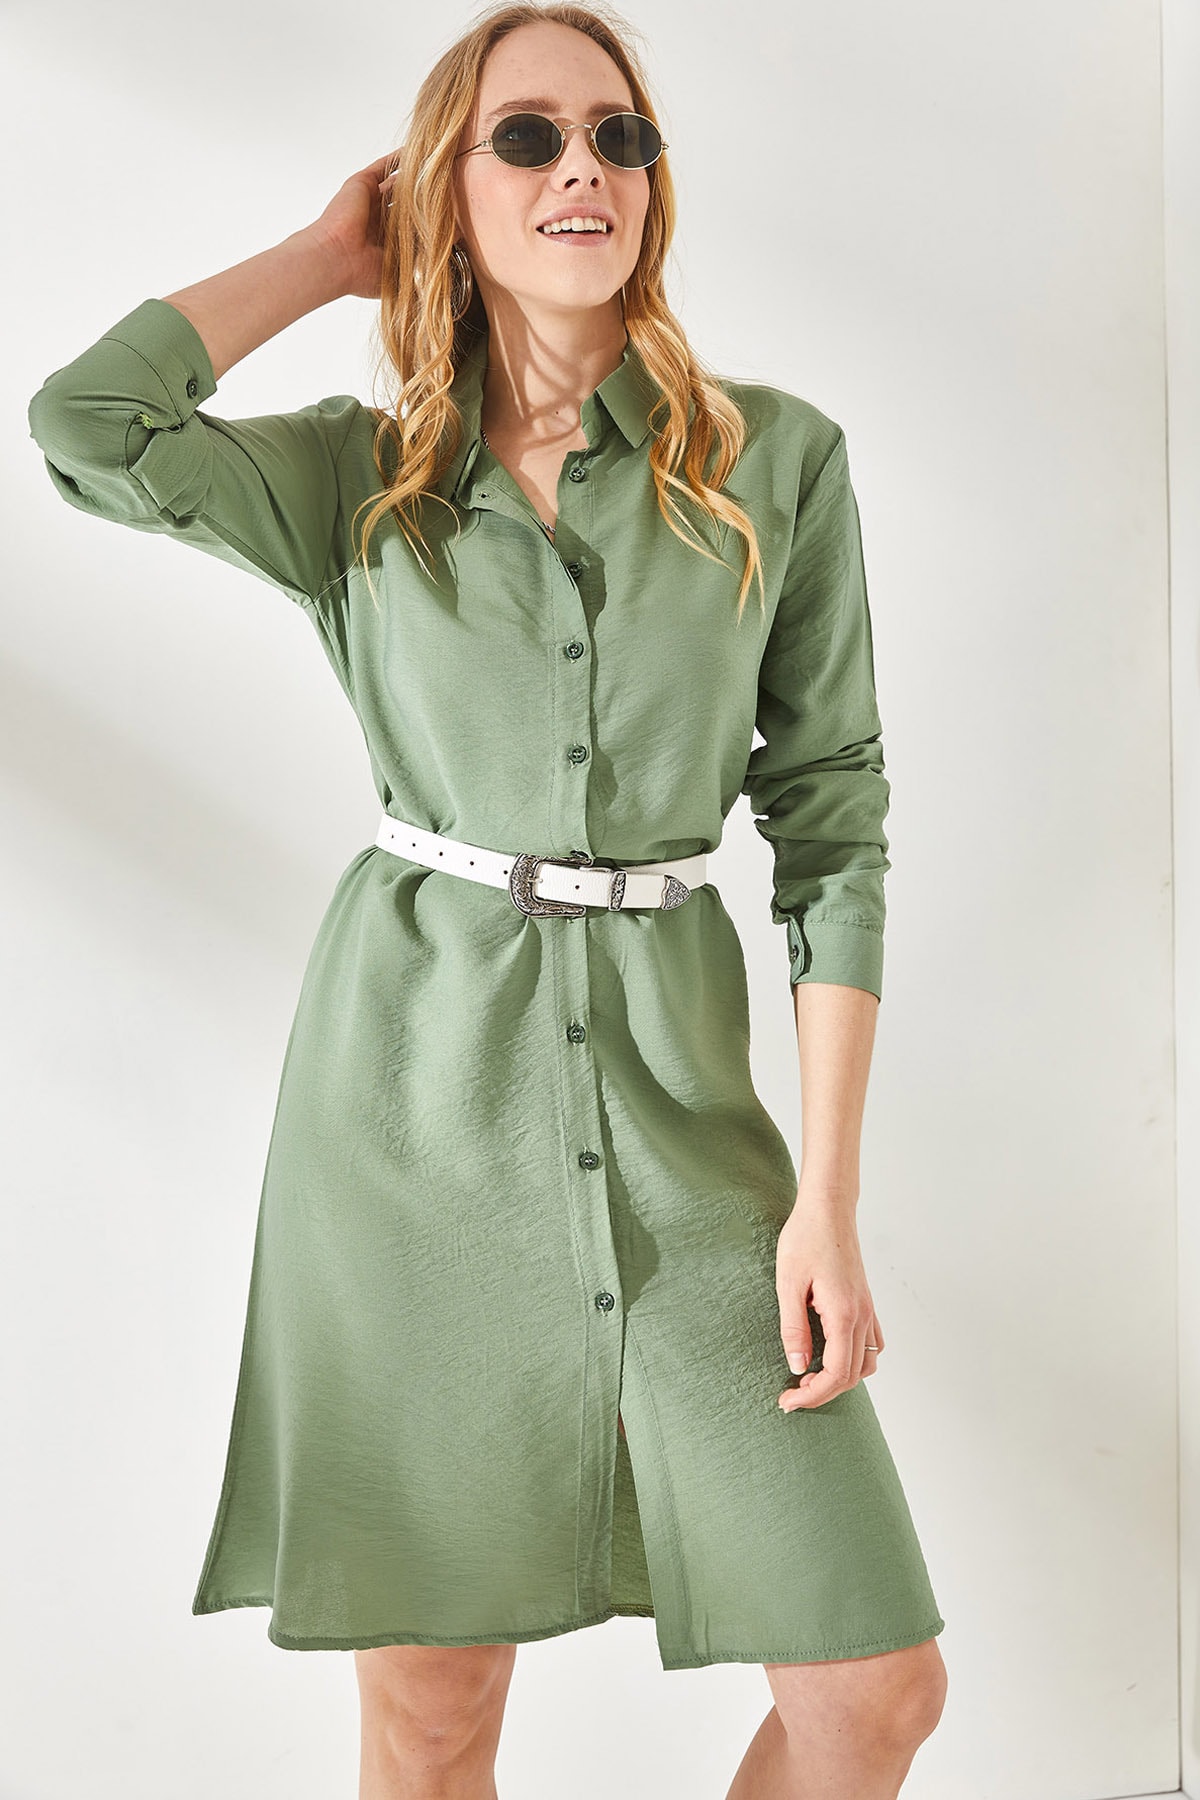 Olalook Kleid Grün Asymmetrisch Fast ausverkauft